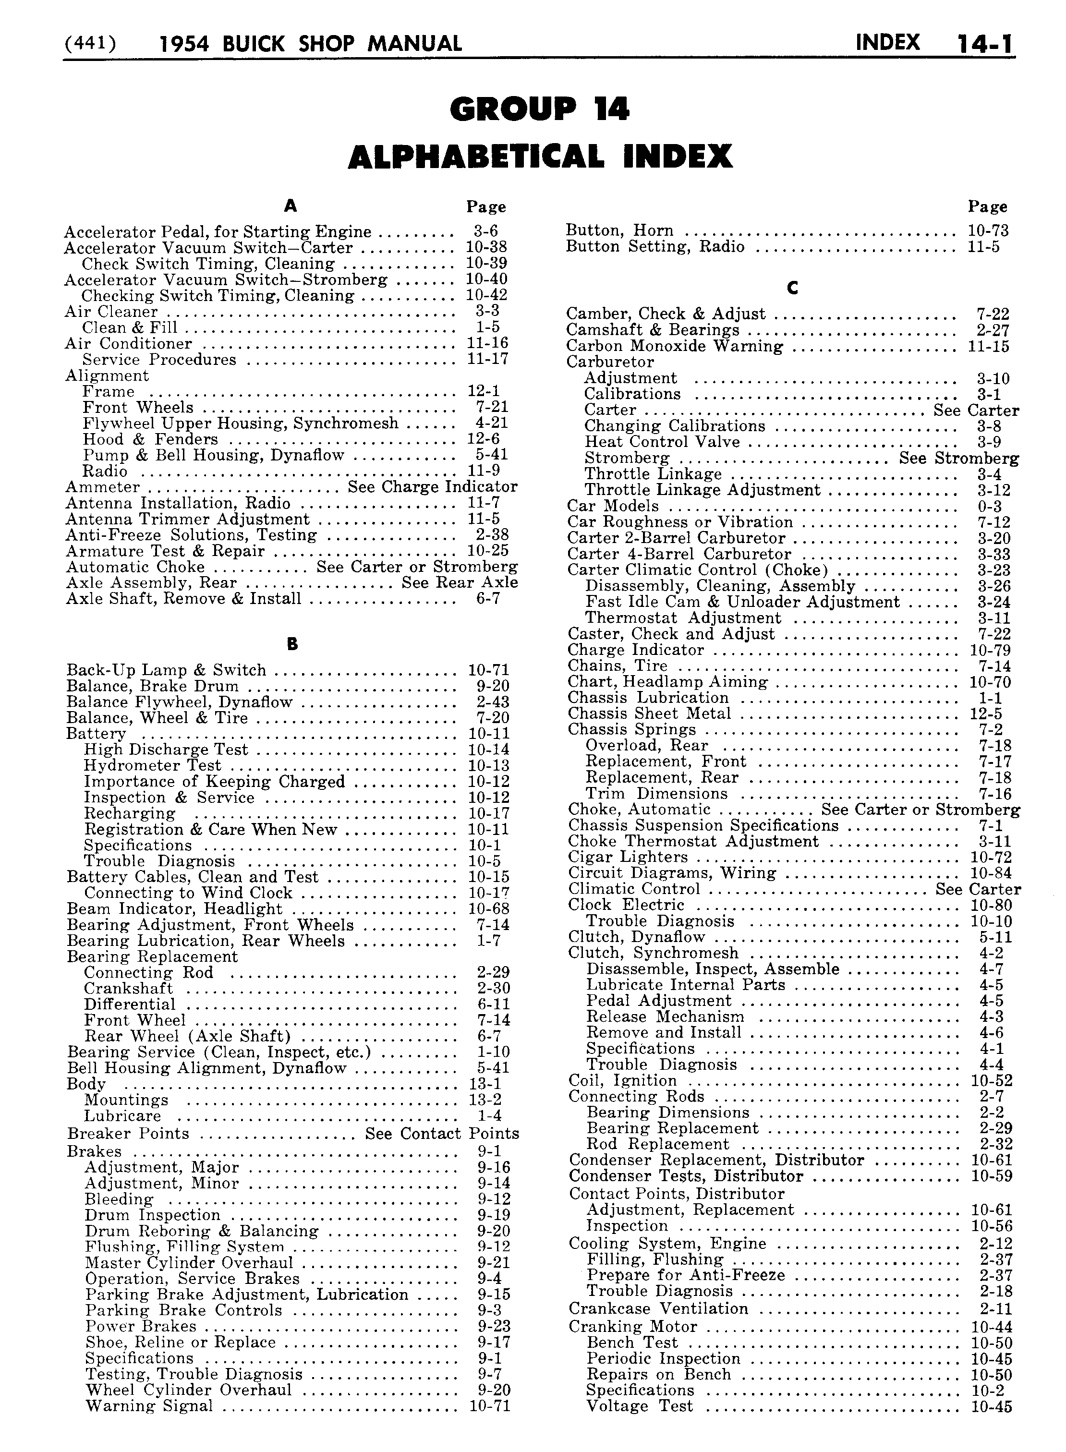 n_15 1954 Buick Shop Manual - Index-001-001.jpg